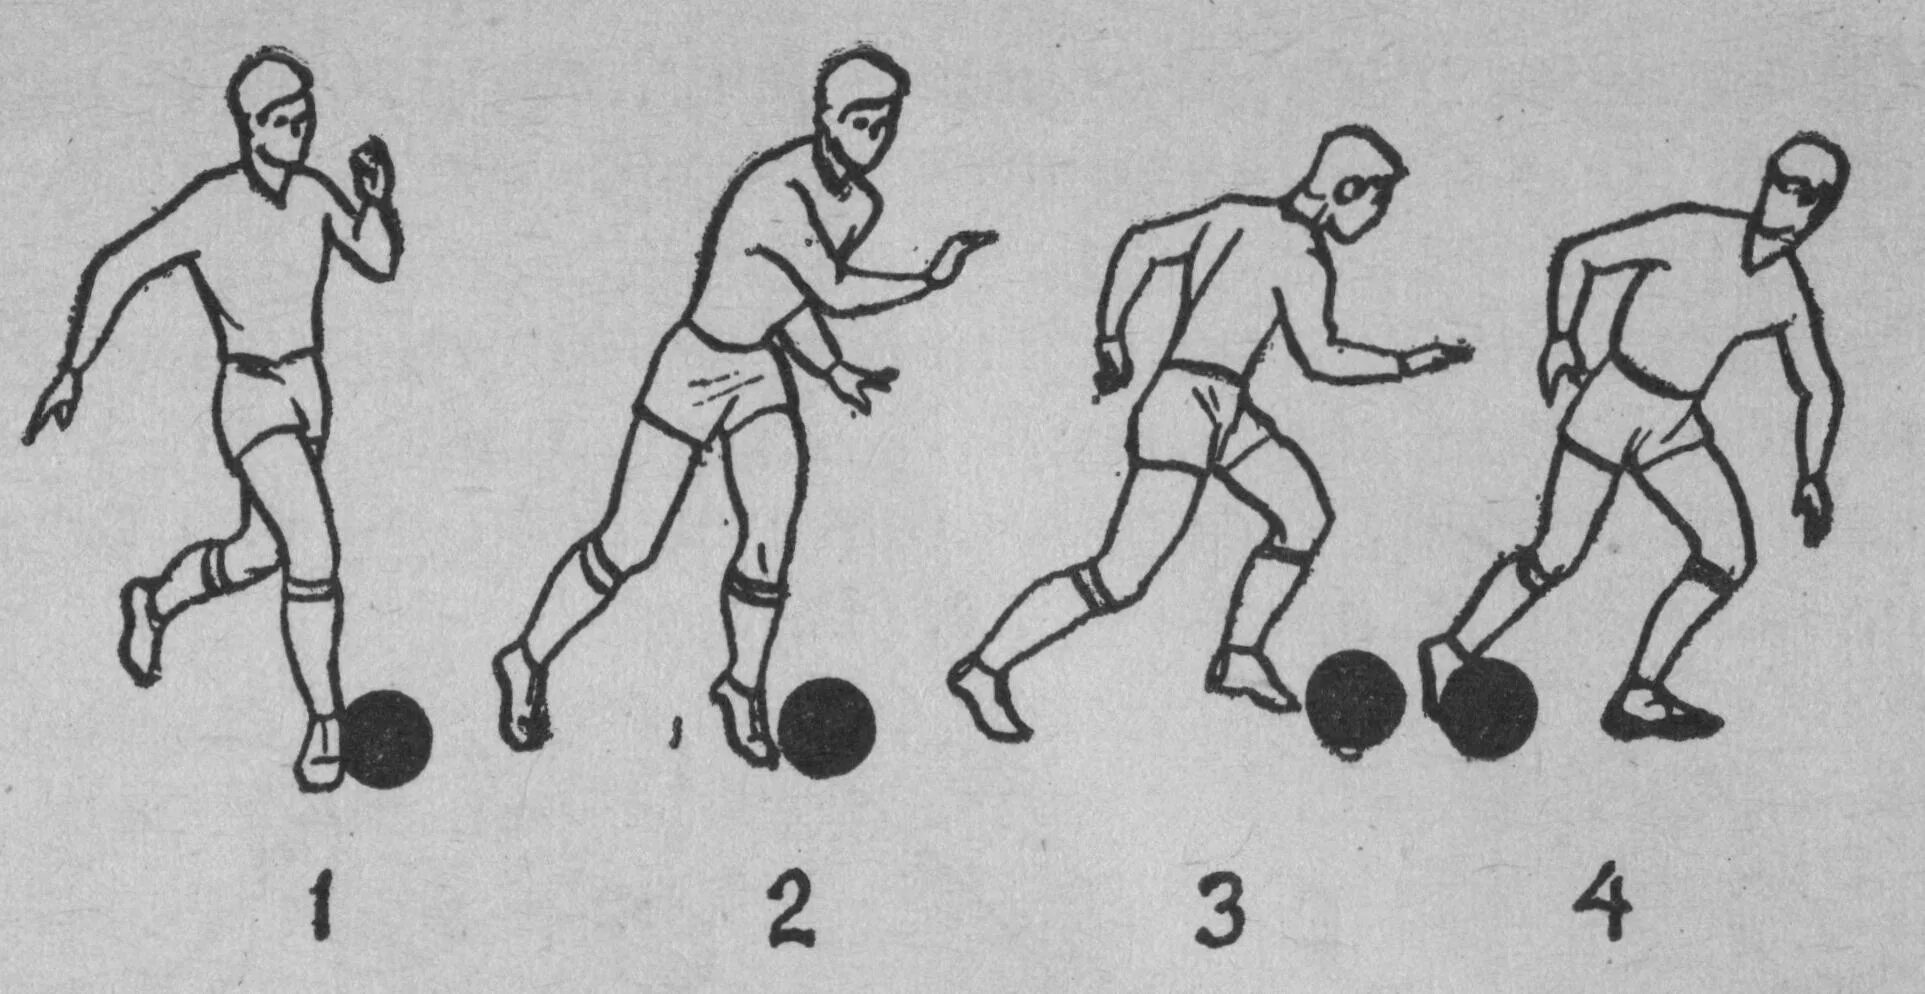 Ведение мяча ногами. Ведение мяча ногой в футболе. Техники ведения мяча ногой в футболе. Приемы ведения мяча в футболе. Упражнения на технику ведения мяча в футболе.